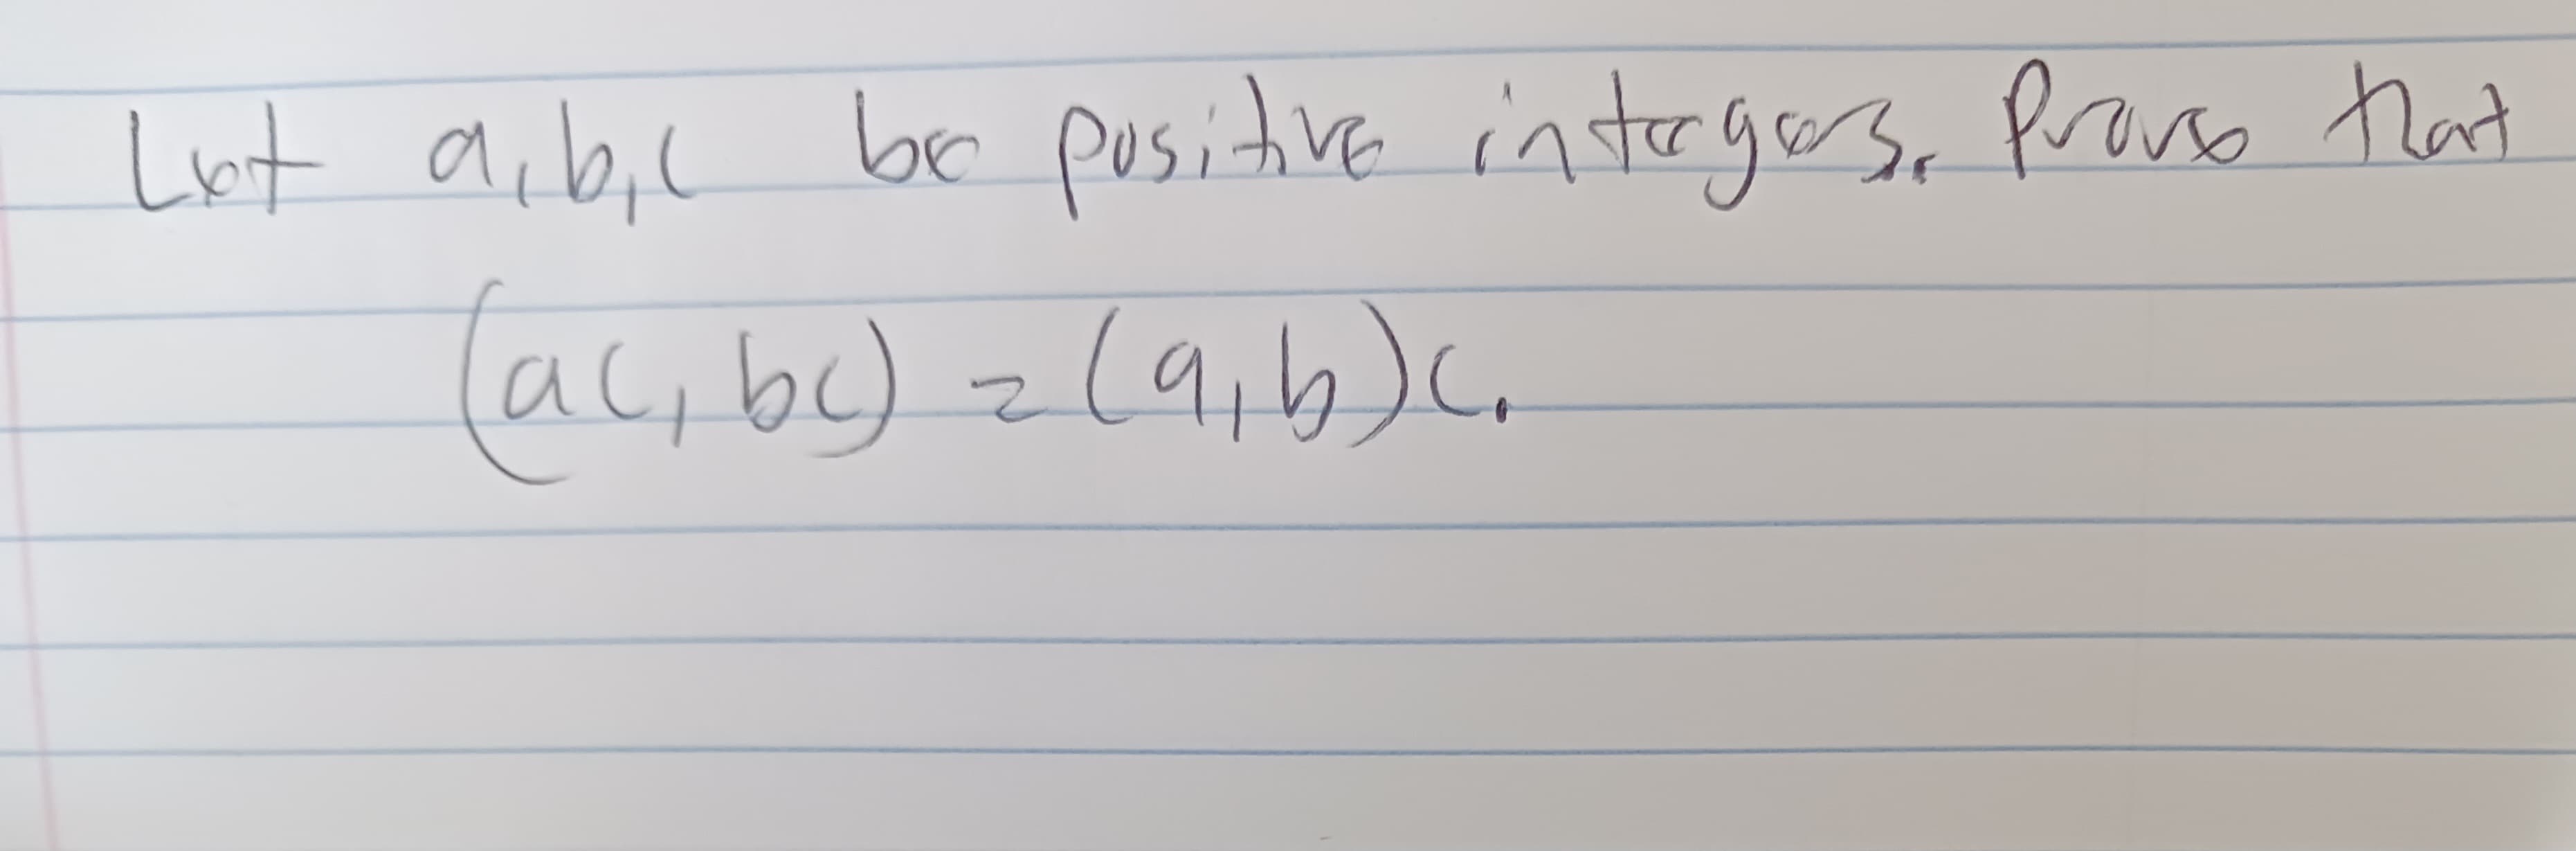 Lot a, b, c be Provso that
Positive inter
(ac, bc) = (9,b)c.